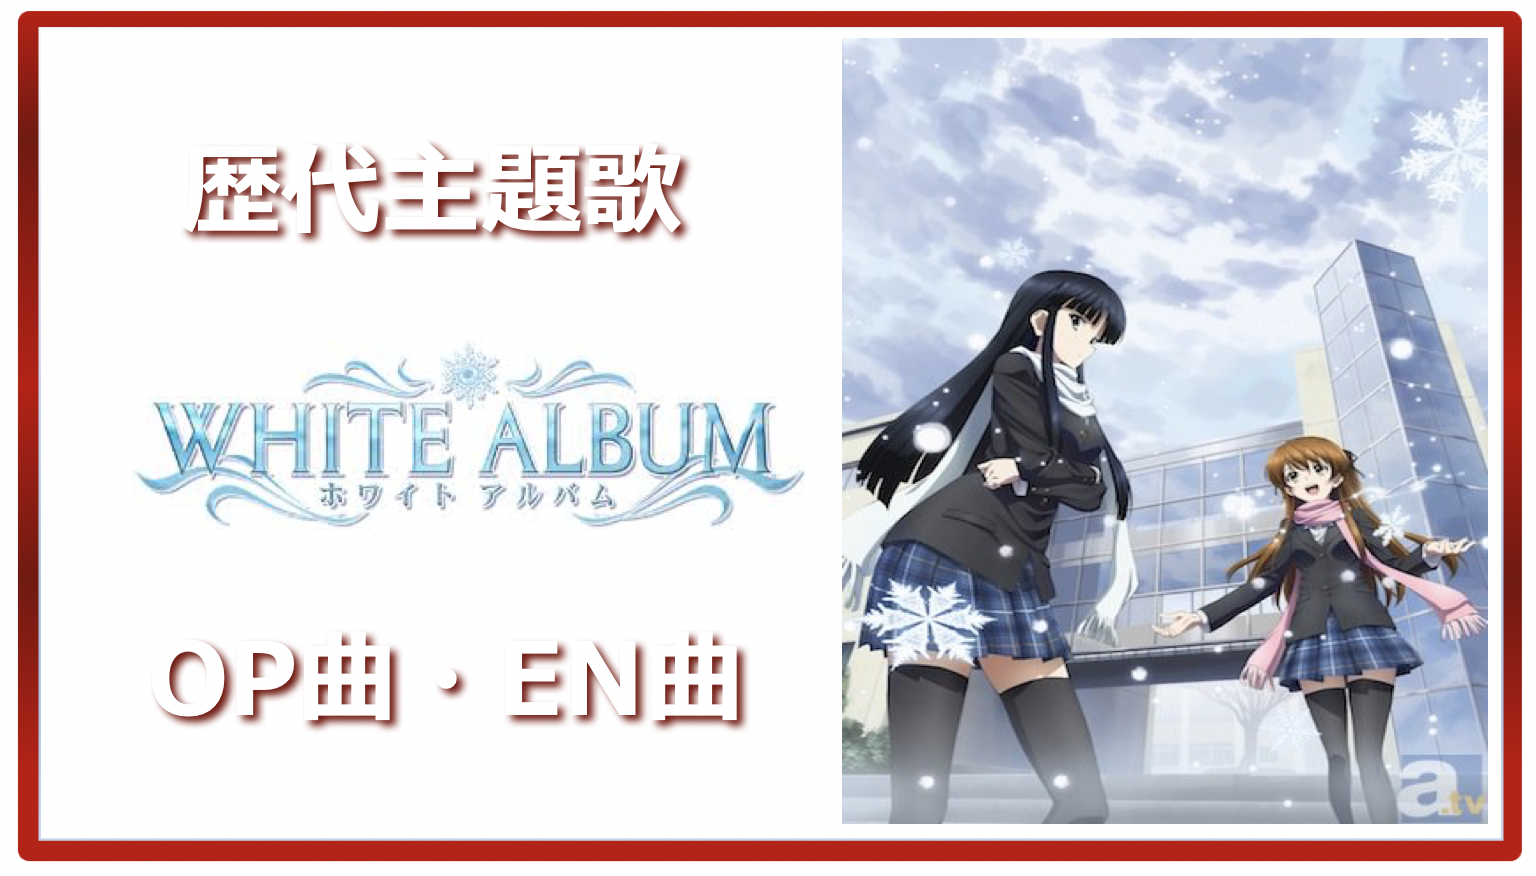 Whitealbum 歴代アニメ主題歌 Op En 全 12 曲 まとめ ランキング アニメソングライブラリー